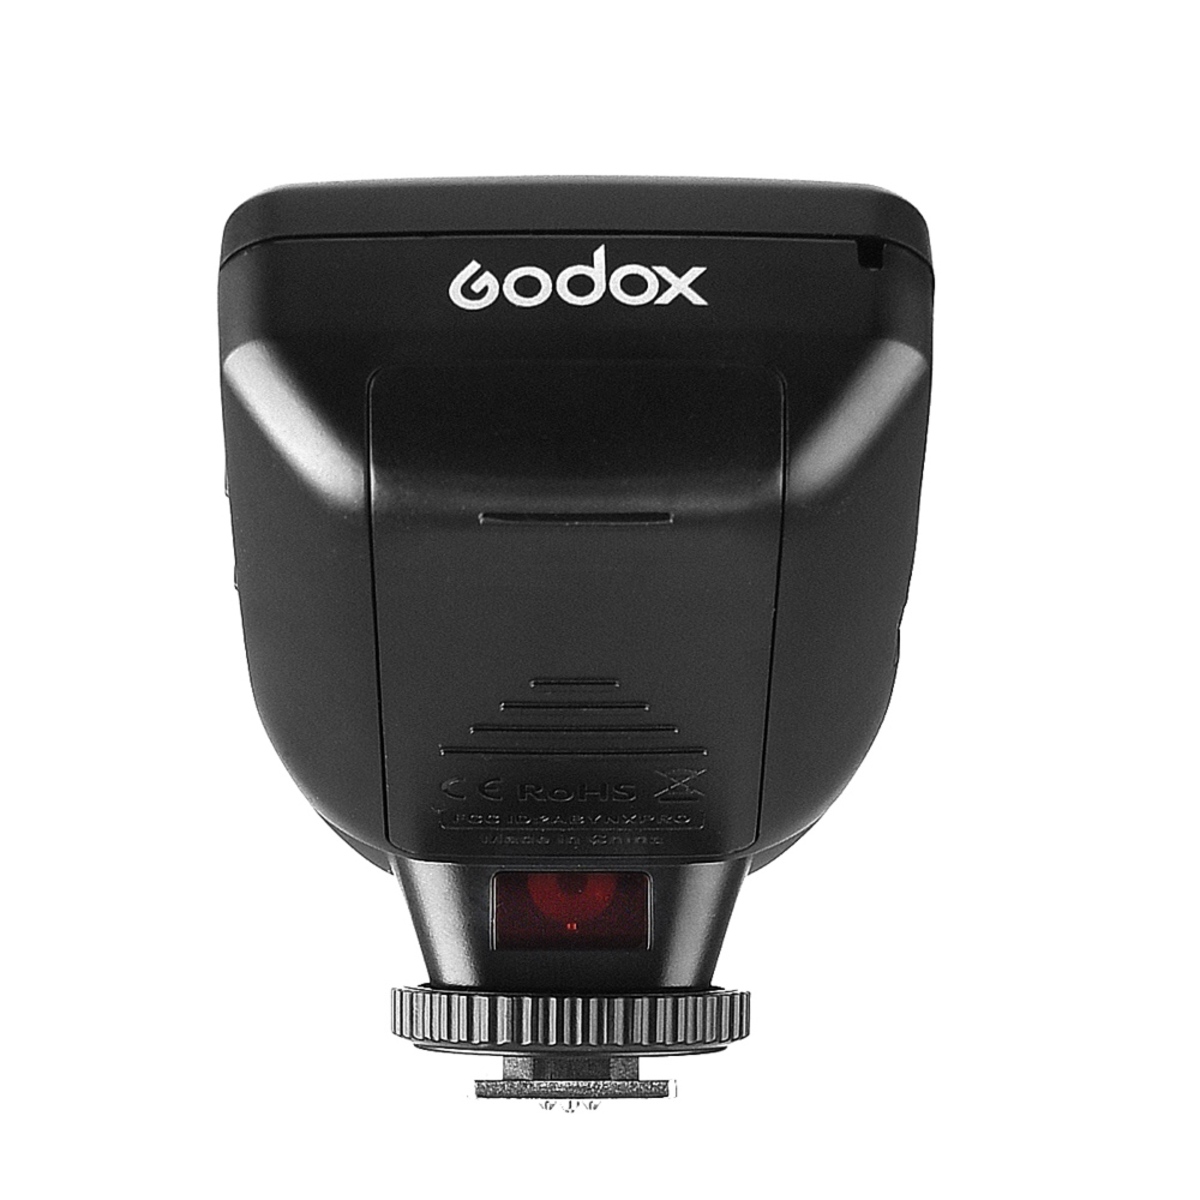 Godox Speedlite V860III Canon X-PRO Trigger Kit